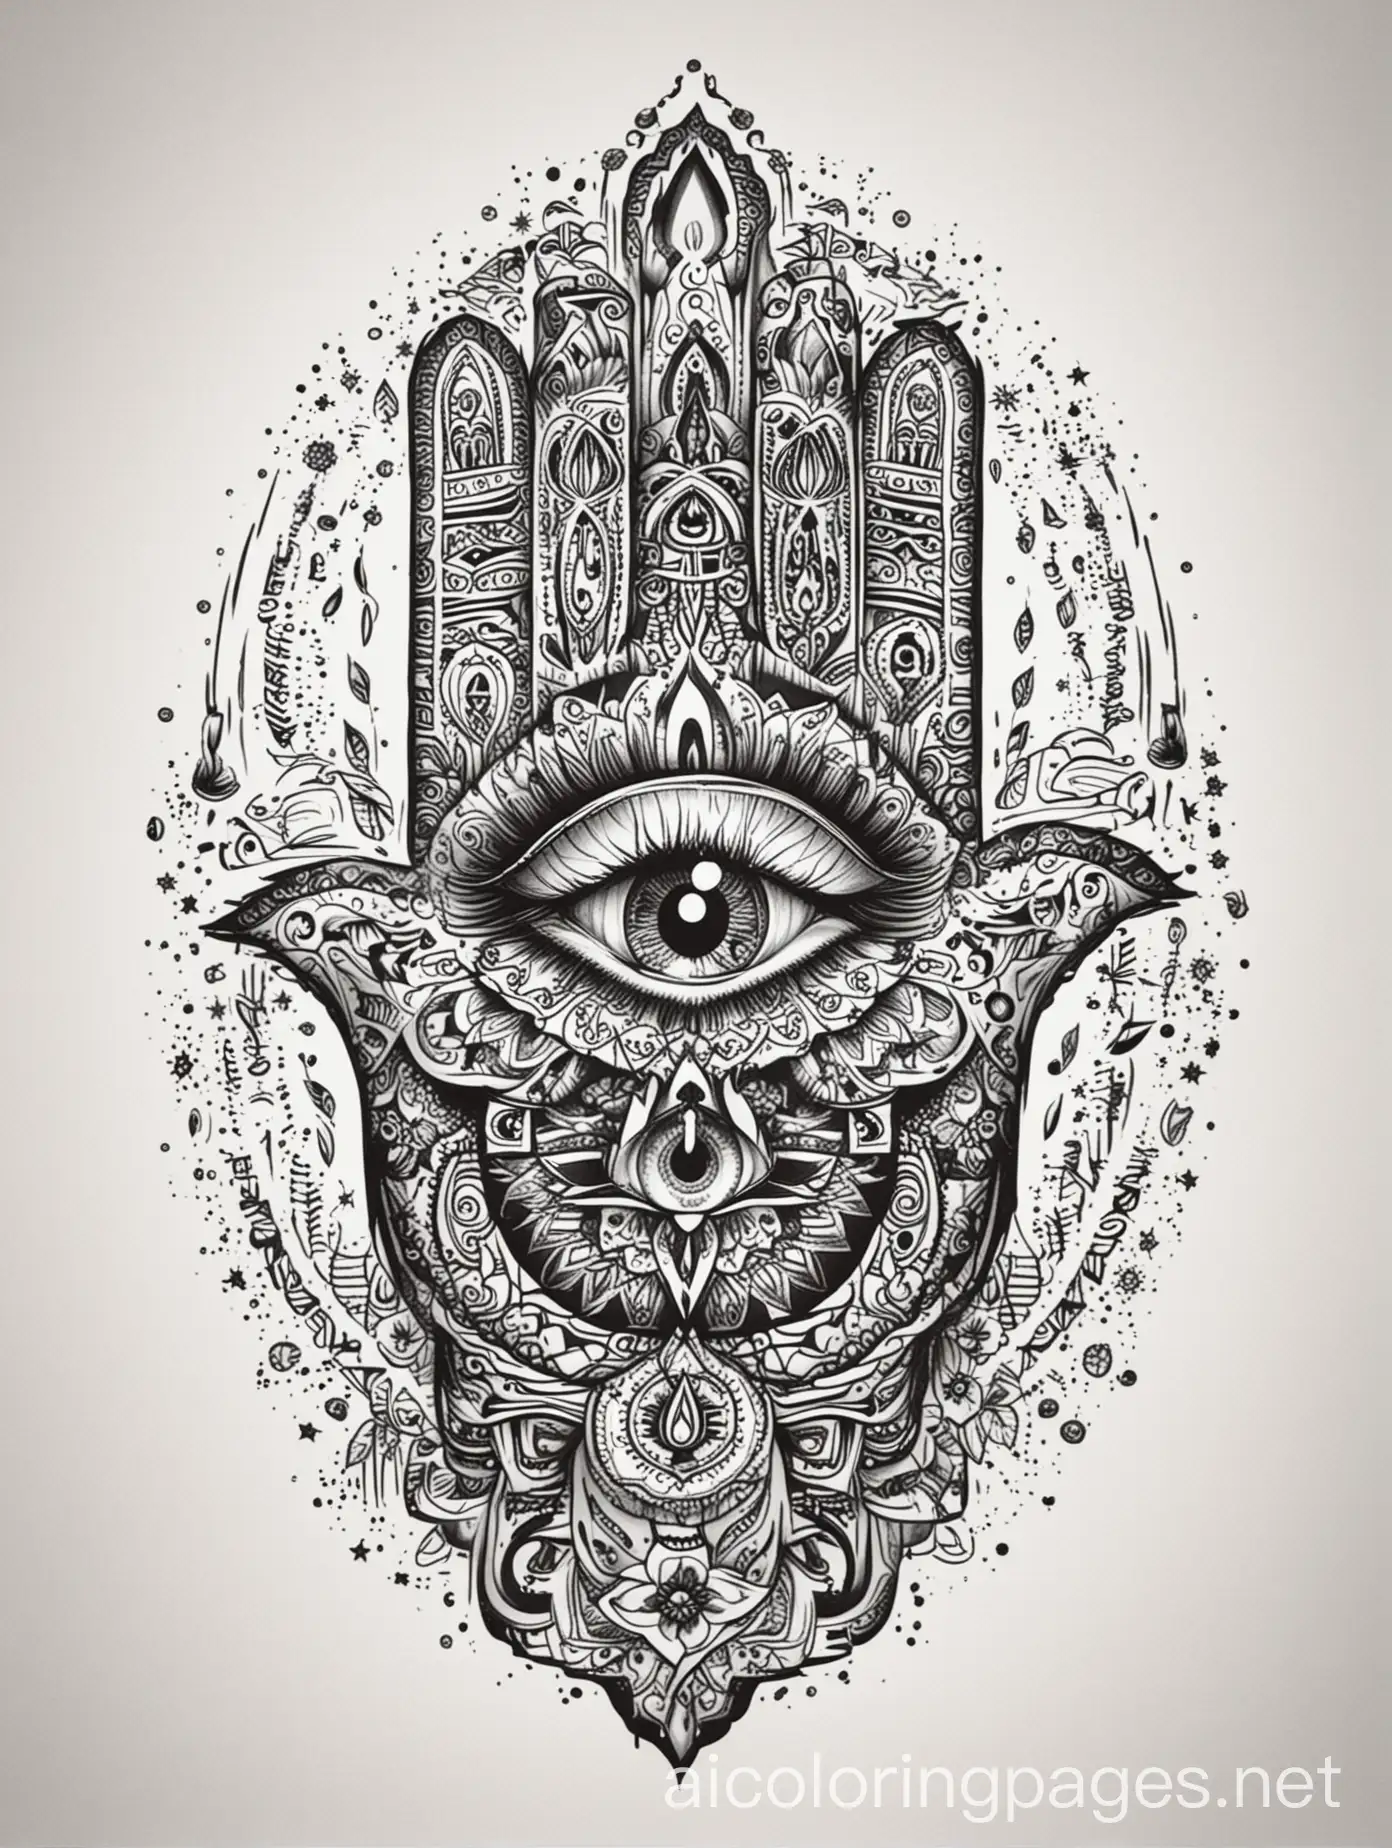 Hamsa-Hand-Tattoo-Design-with-Illuminated-Eye-Intricate-Line-Art-Coloring-Page